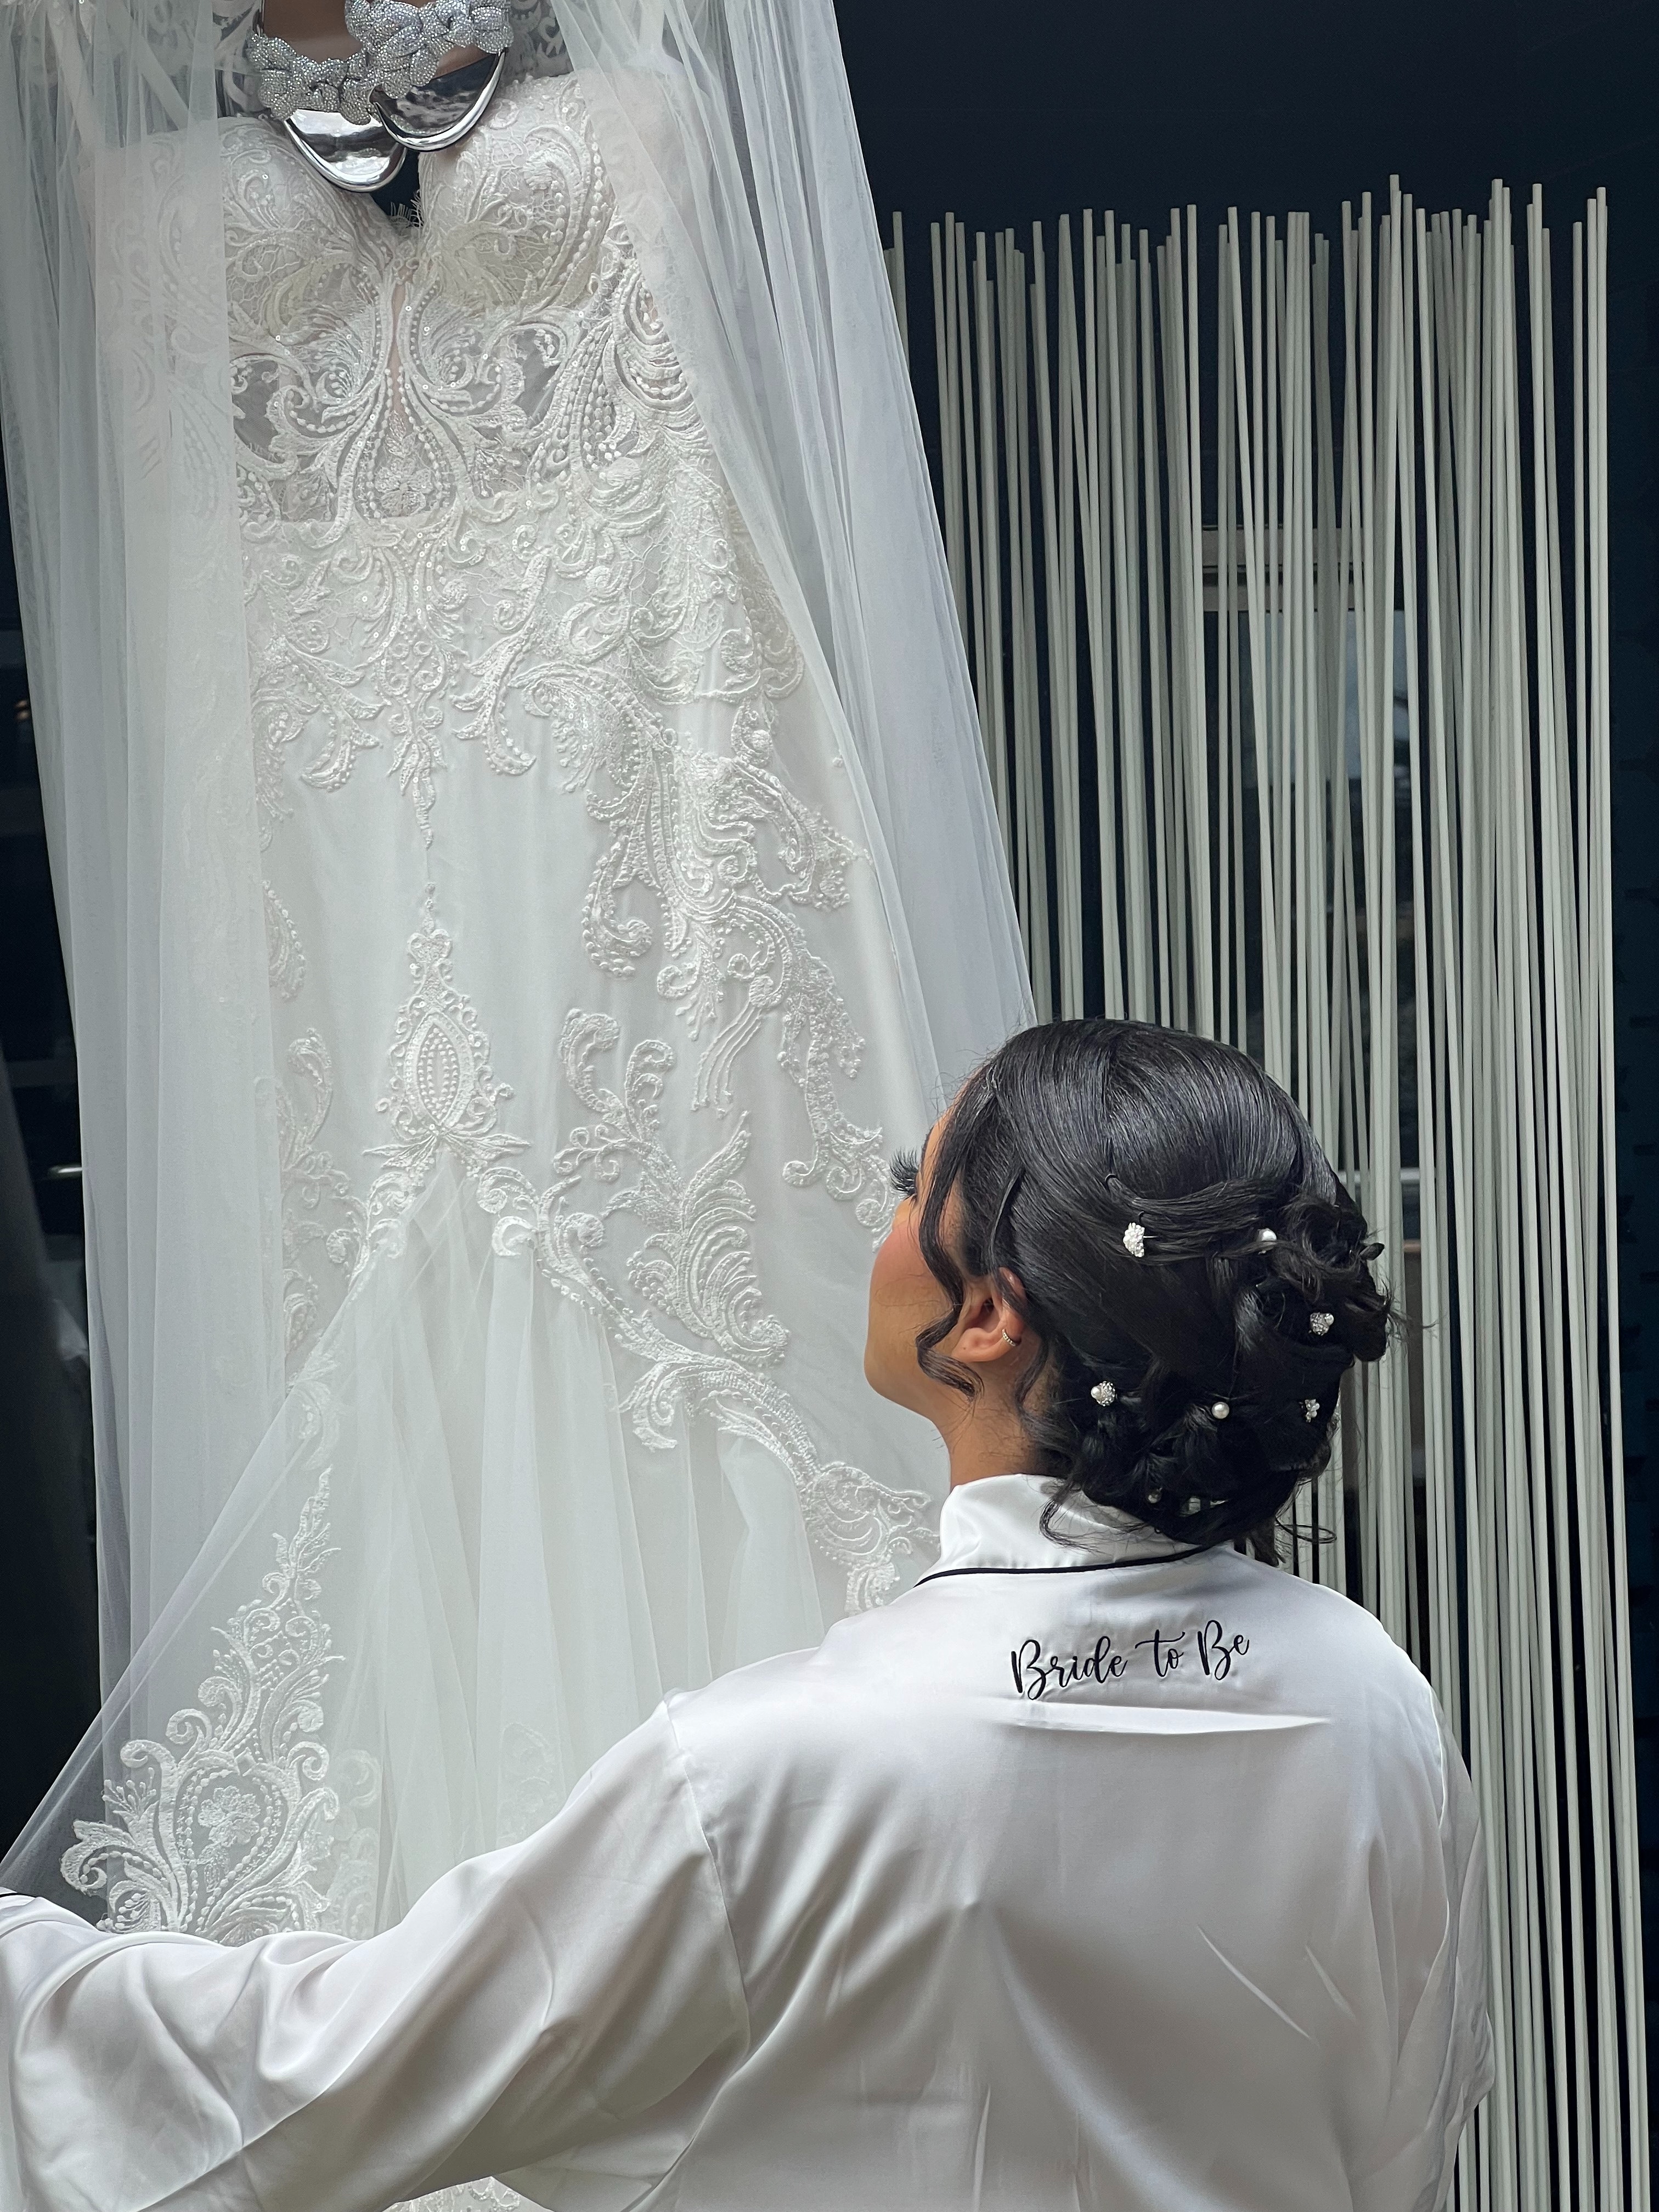 Femme regardant une robe de mariée | Source : Pexels